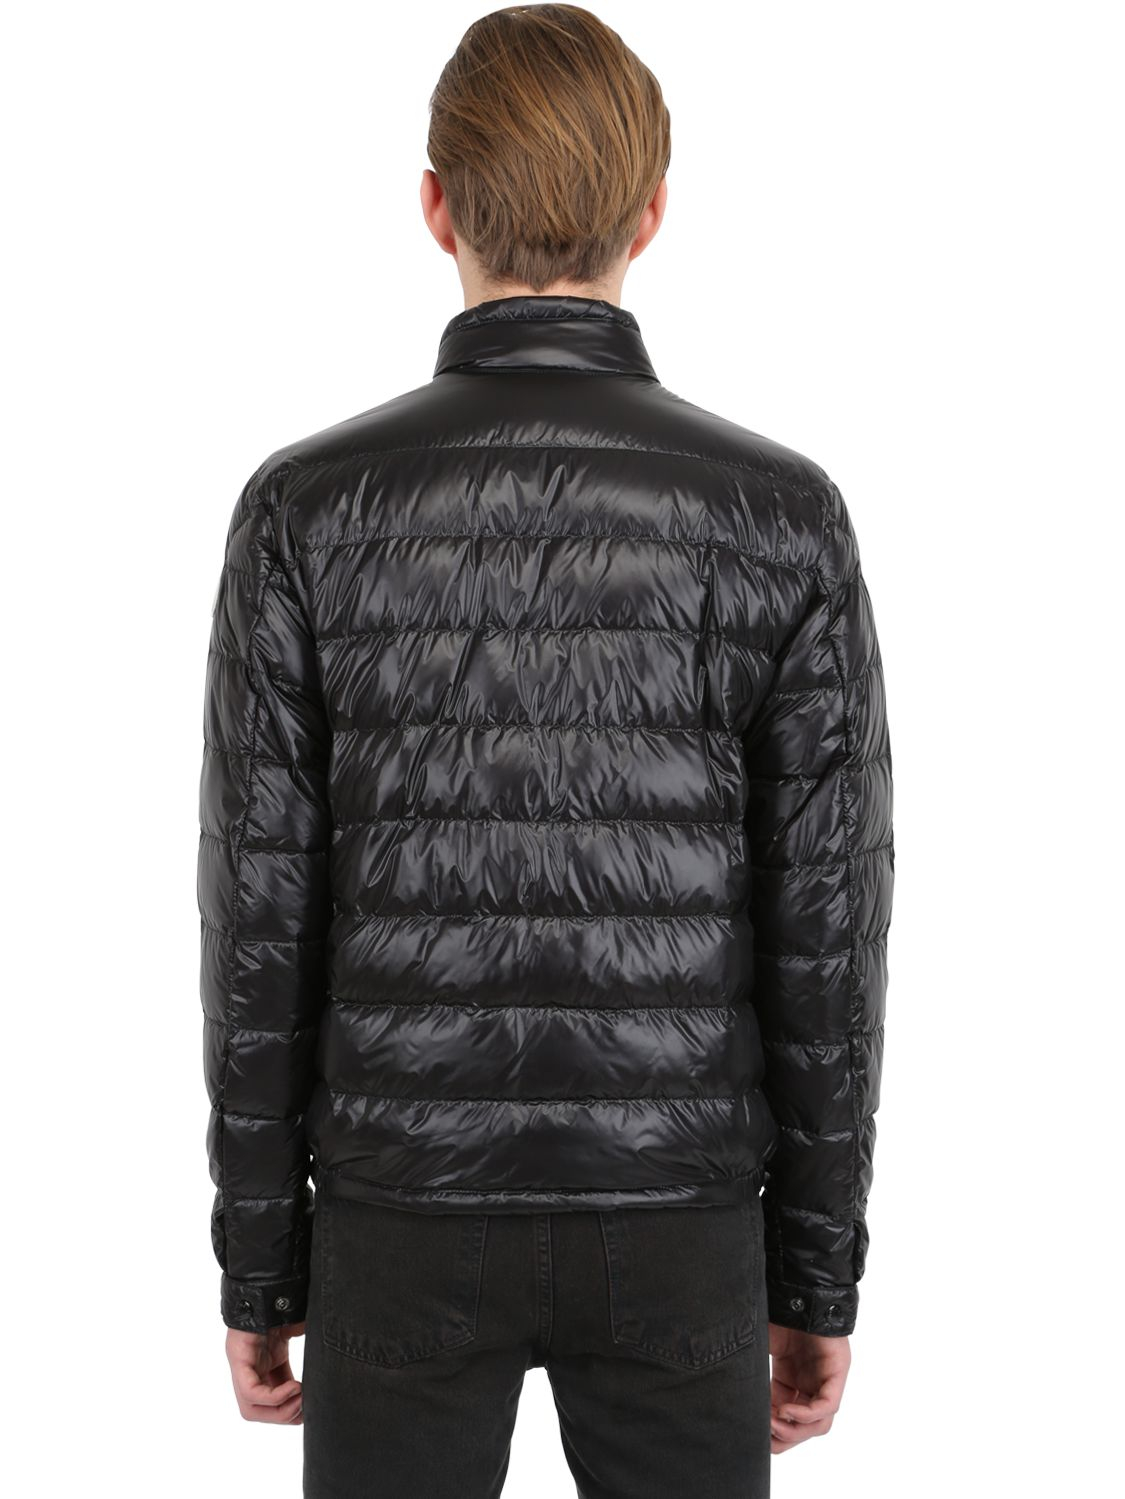 Lyst - Moncler Acorus Nylon Light Weight Down Jacket in Black for Men